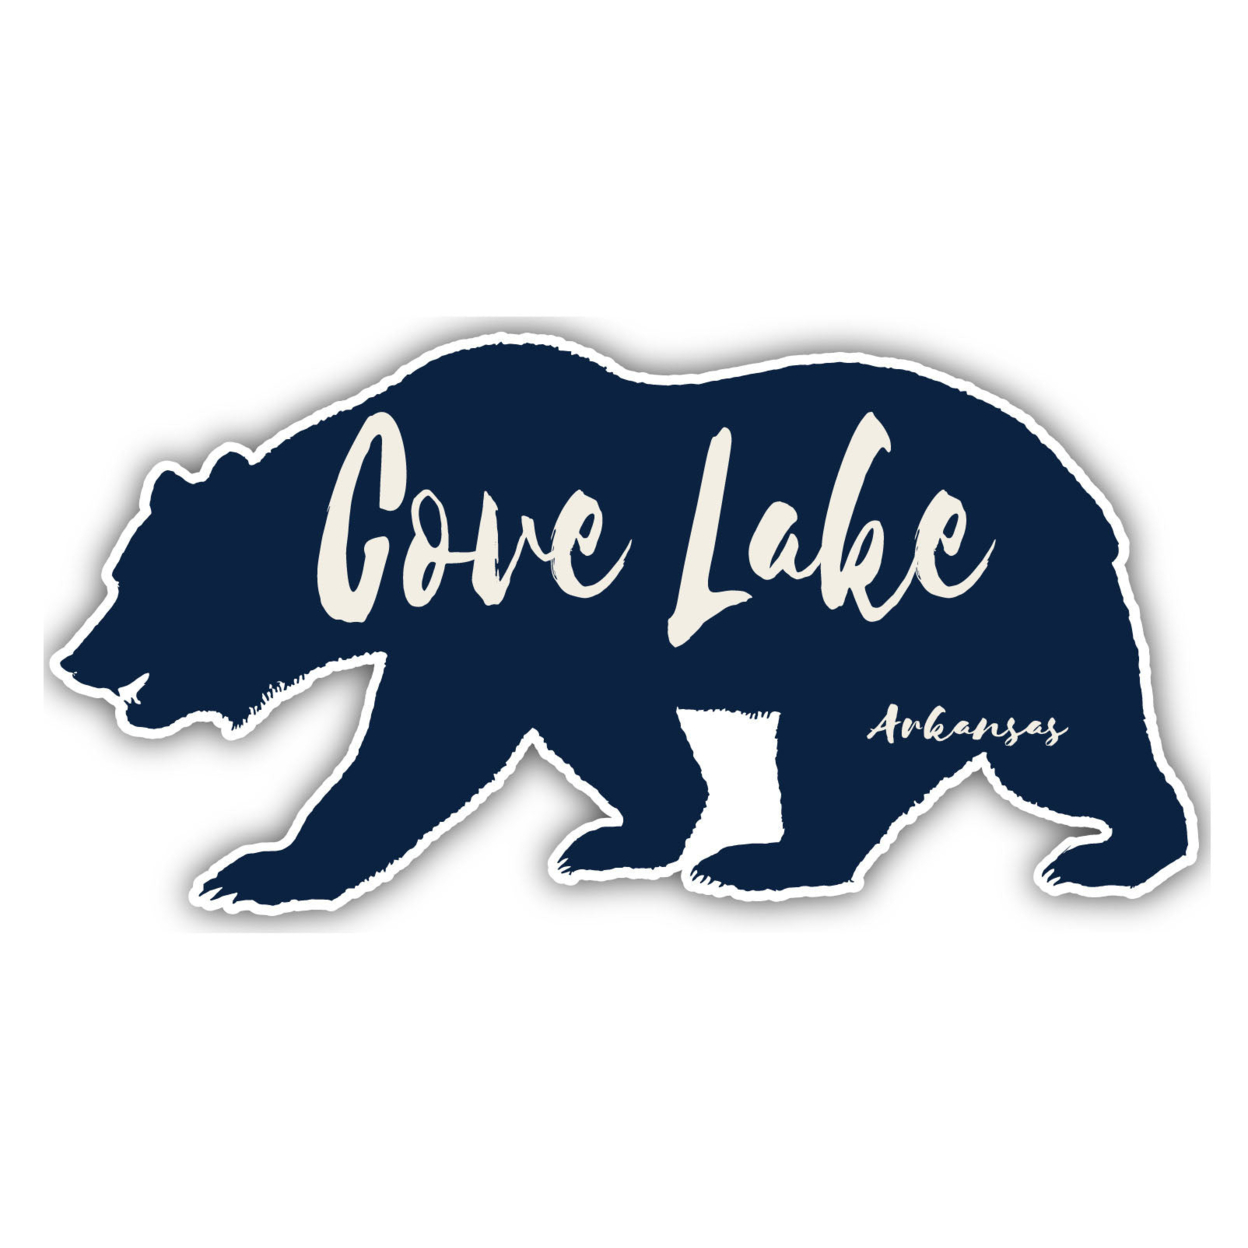 Cove Lake Arkansas Souvenir Decorative Stickers (Choose Theme And Size) - Single Unit, 10-Inch, Bear